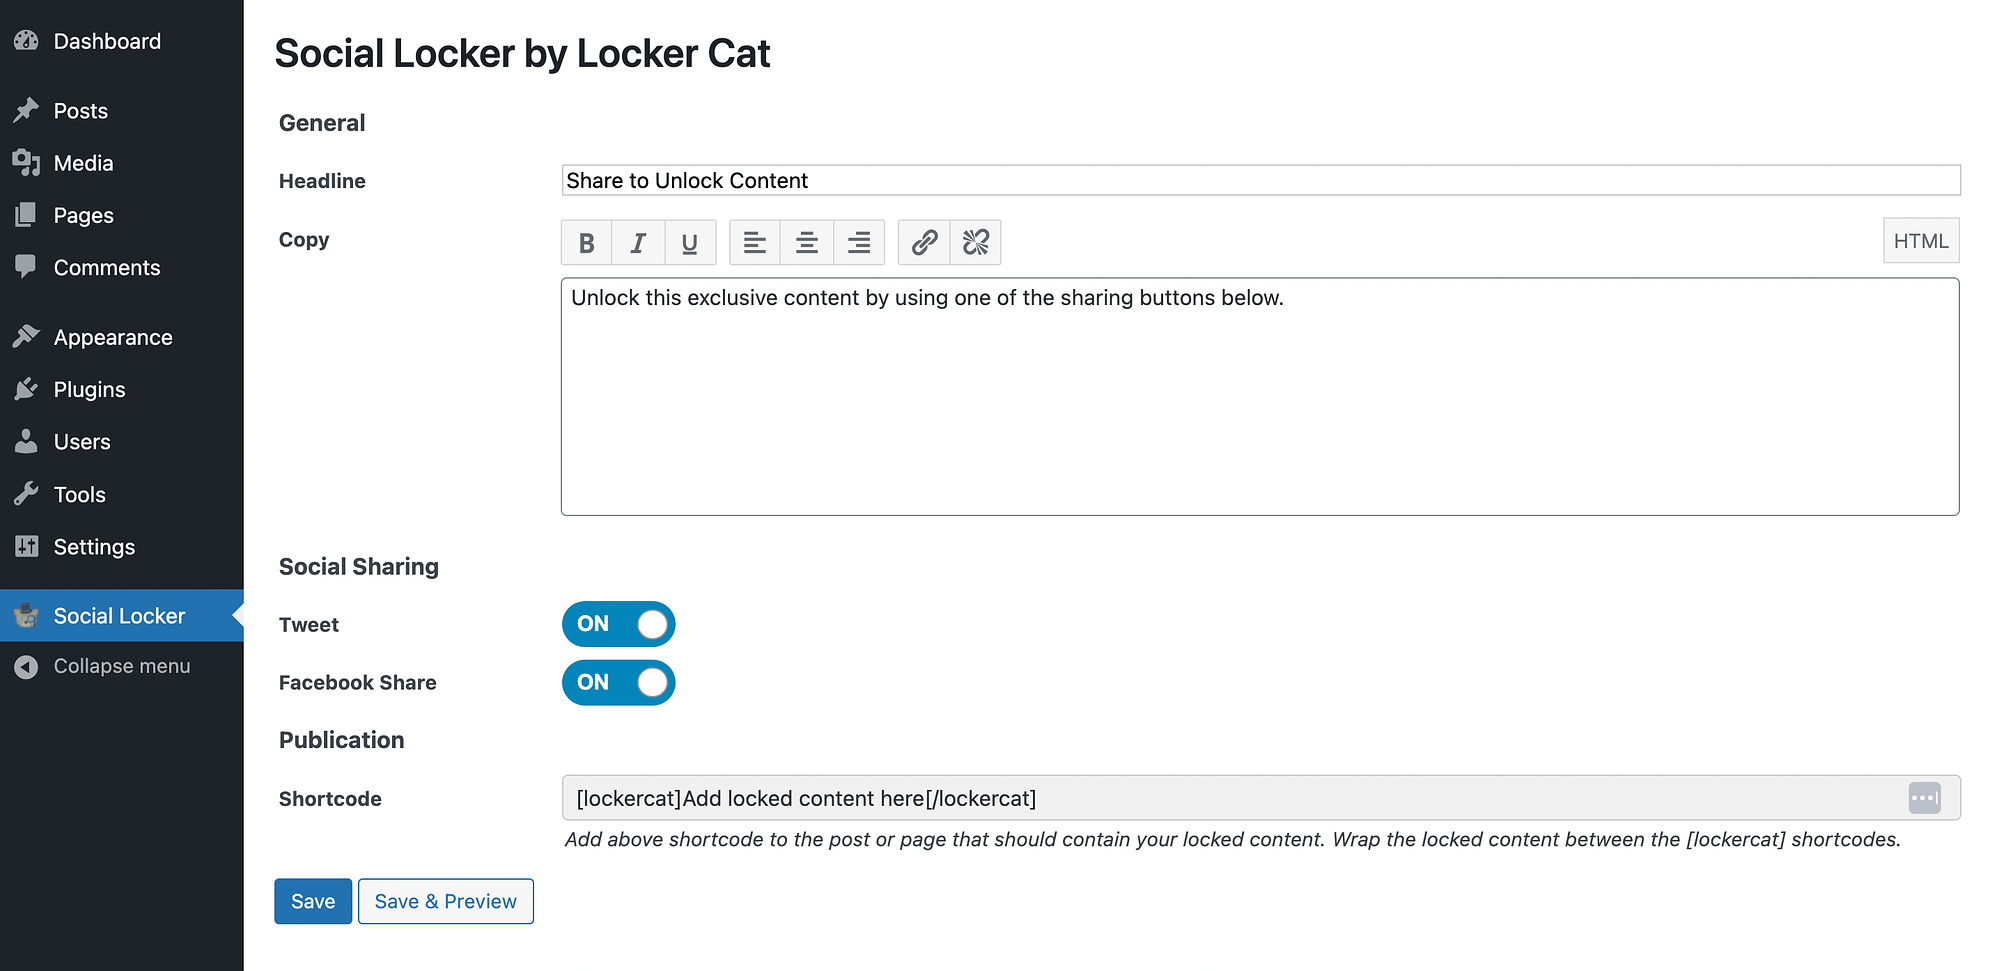 Customizing your settings in Locker Cat.